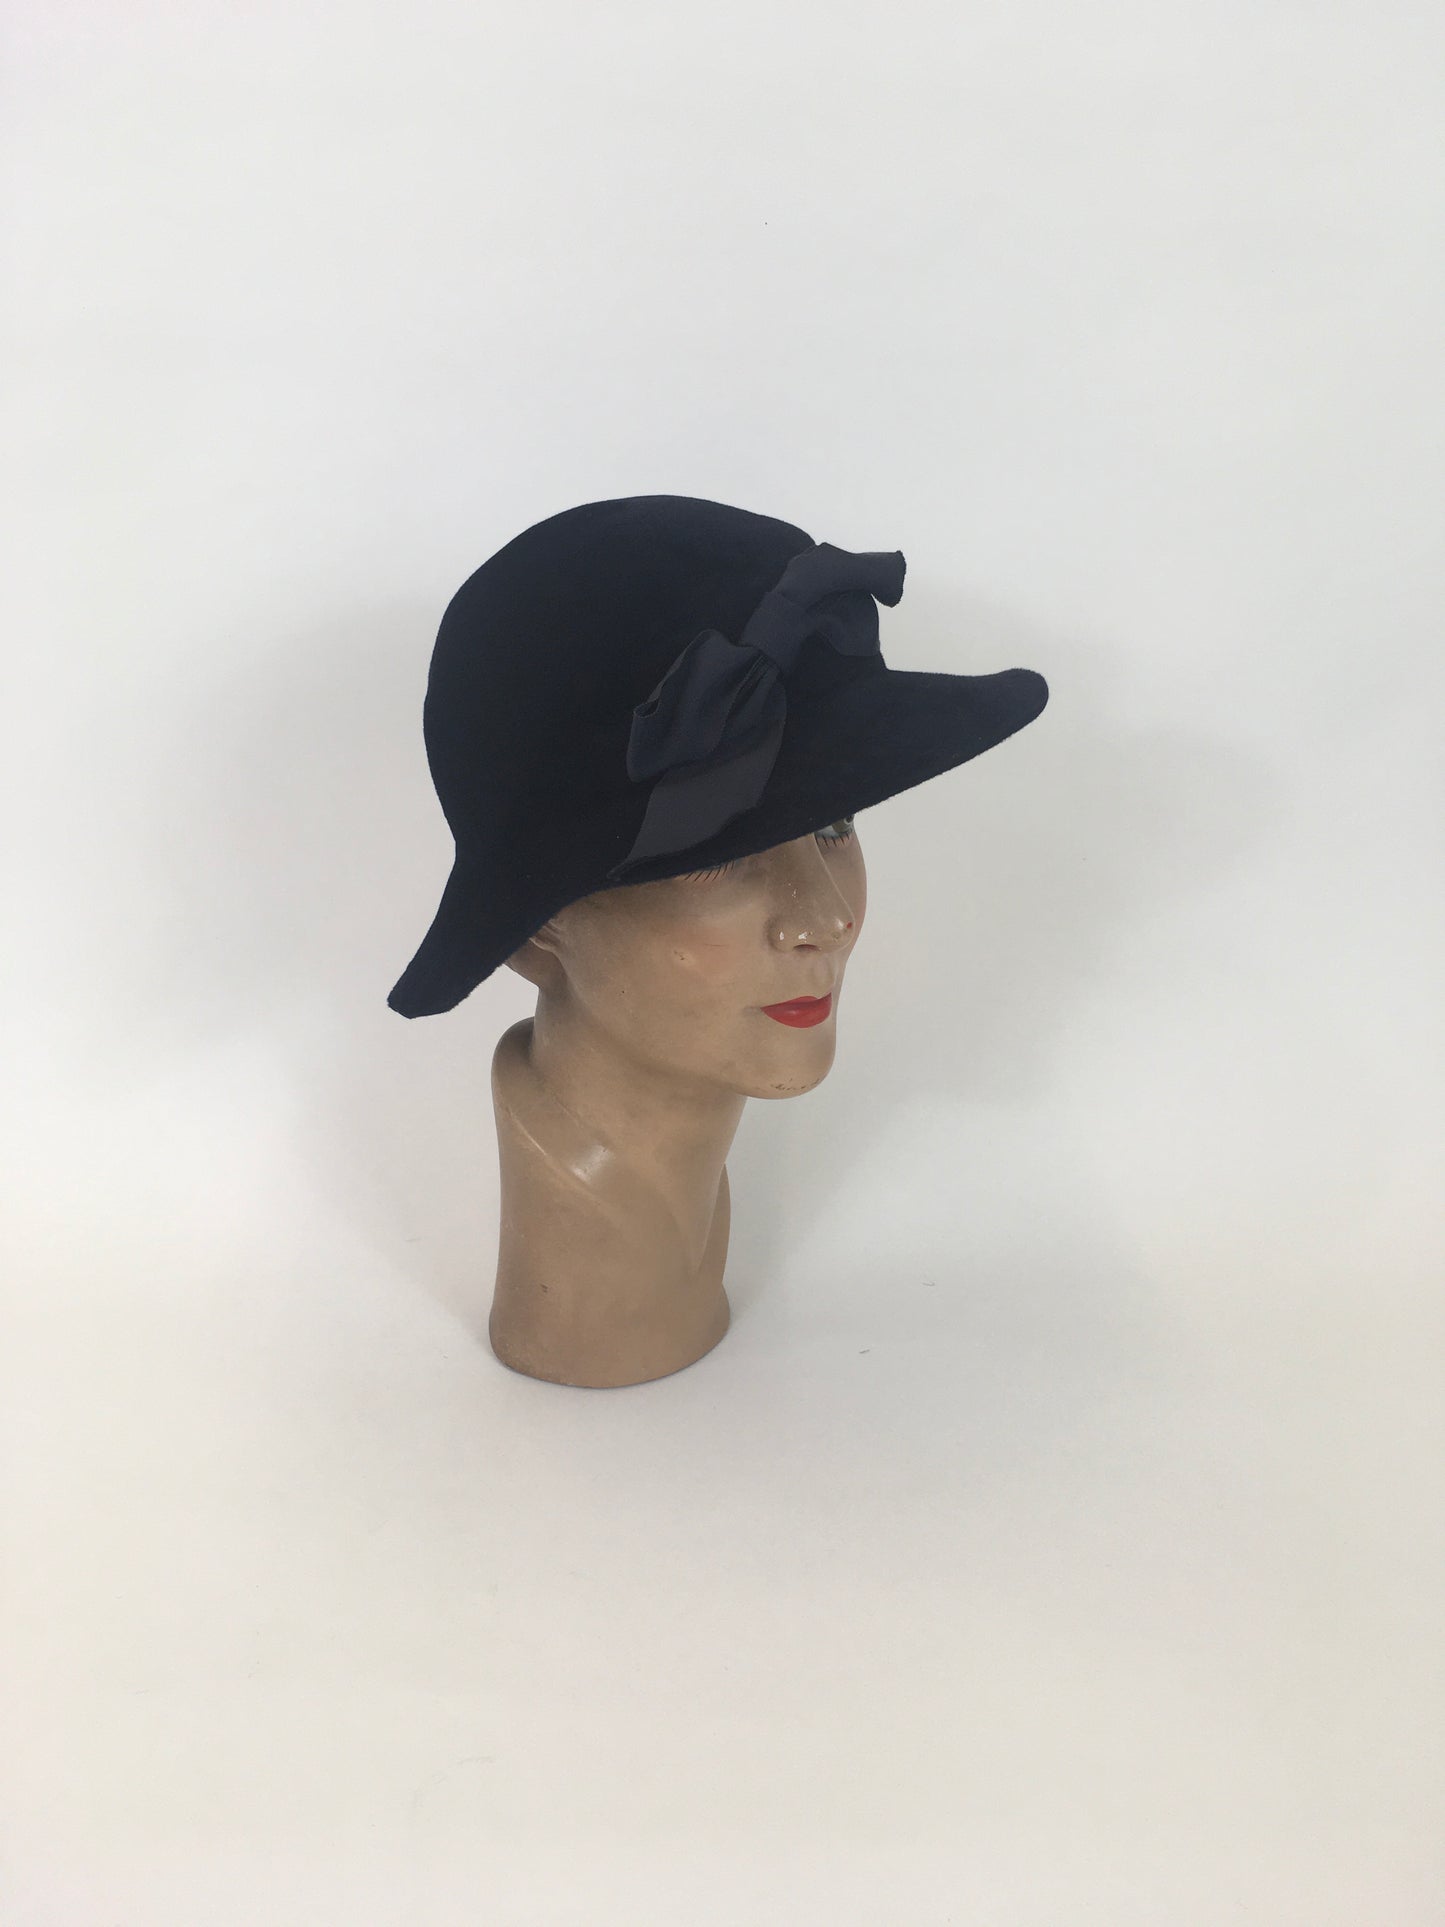 Original Edwardian Sensational Hat with Bow Adornment - In A Rich Blue Plume Velvet